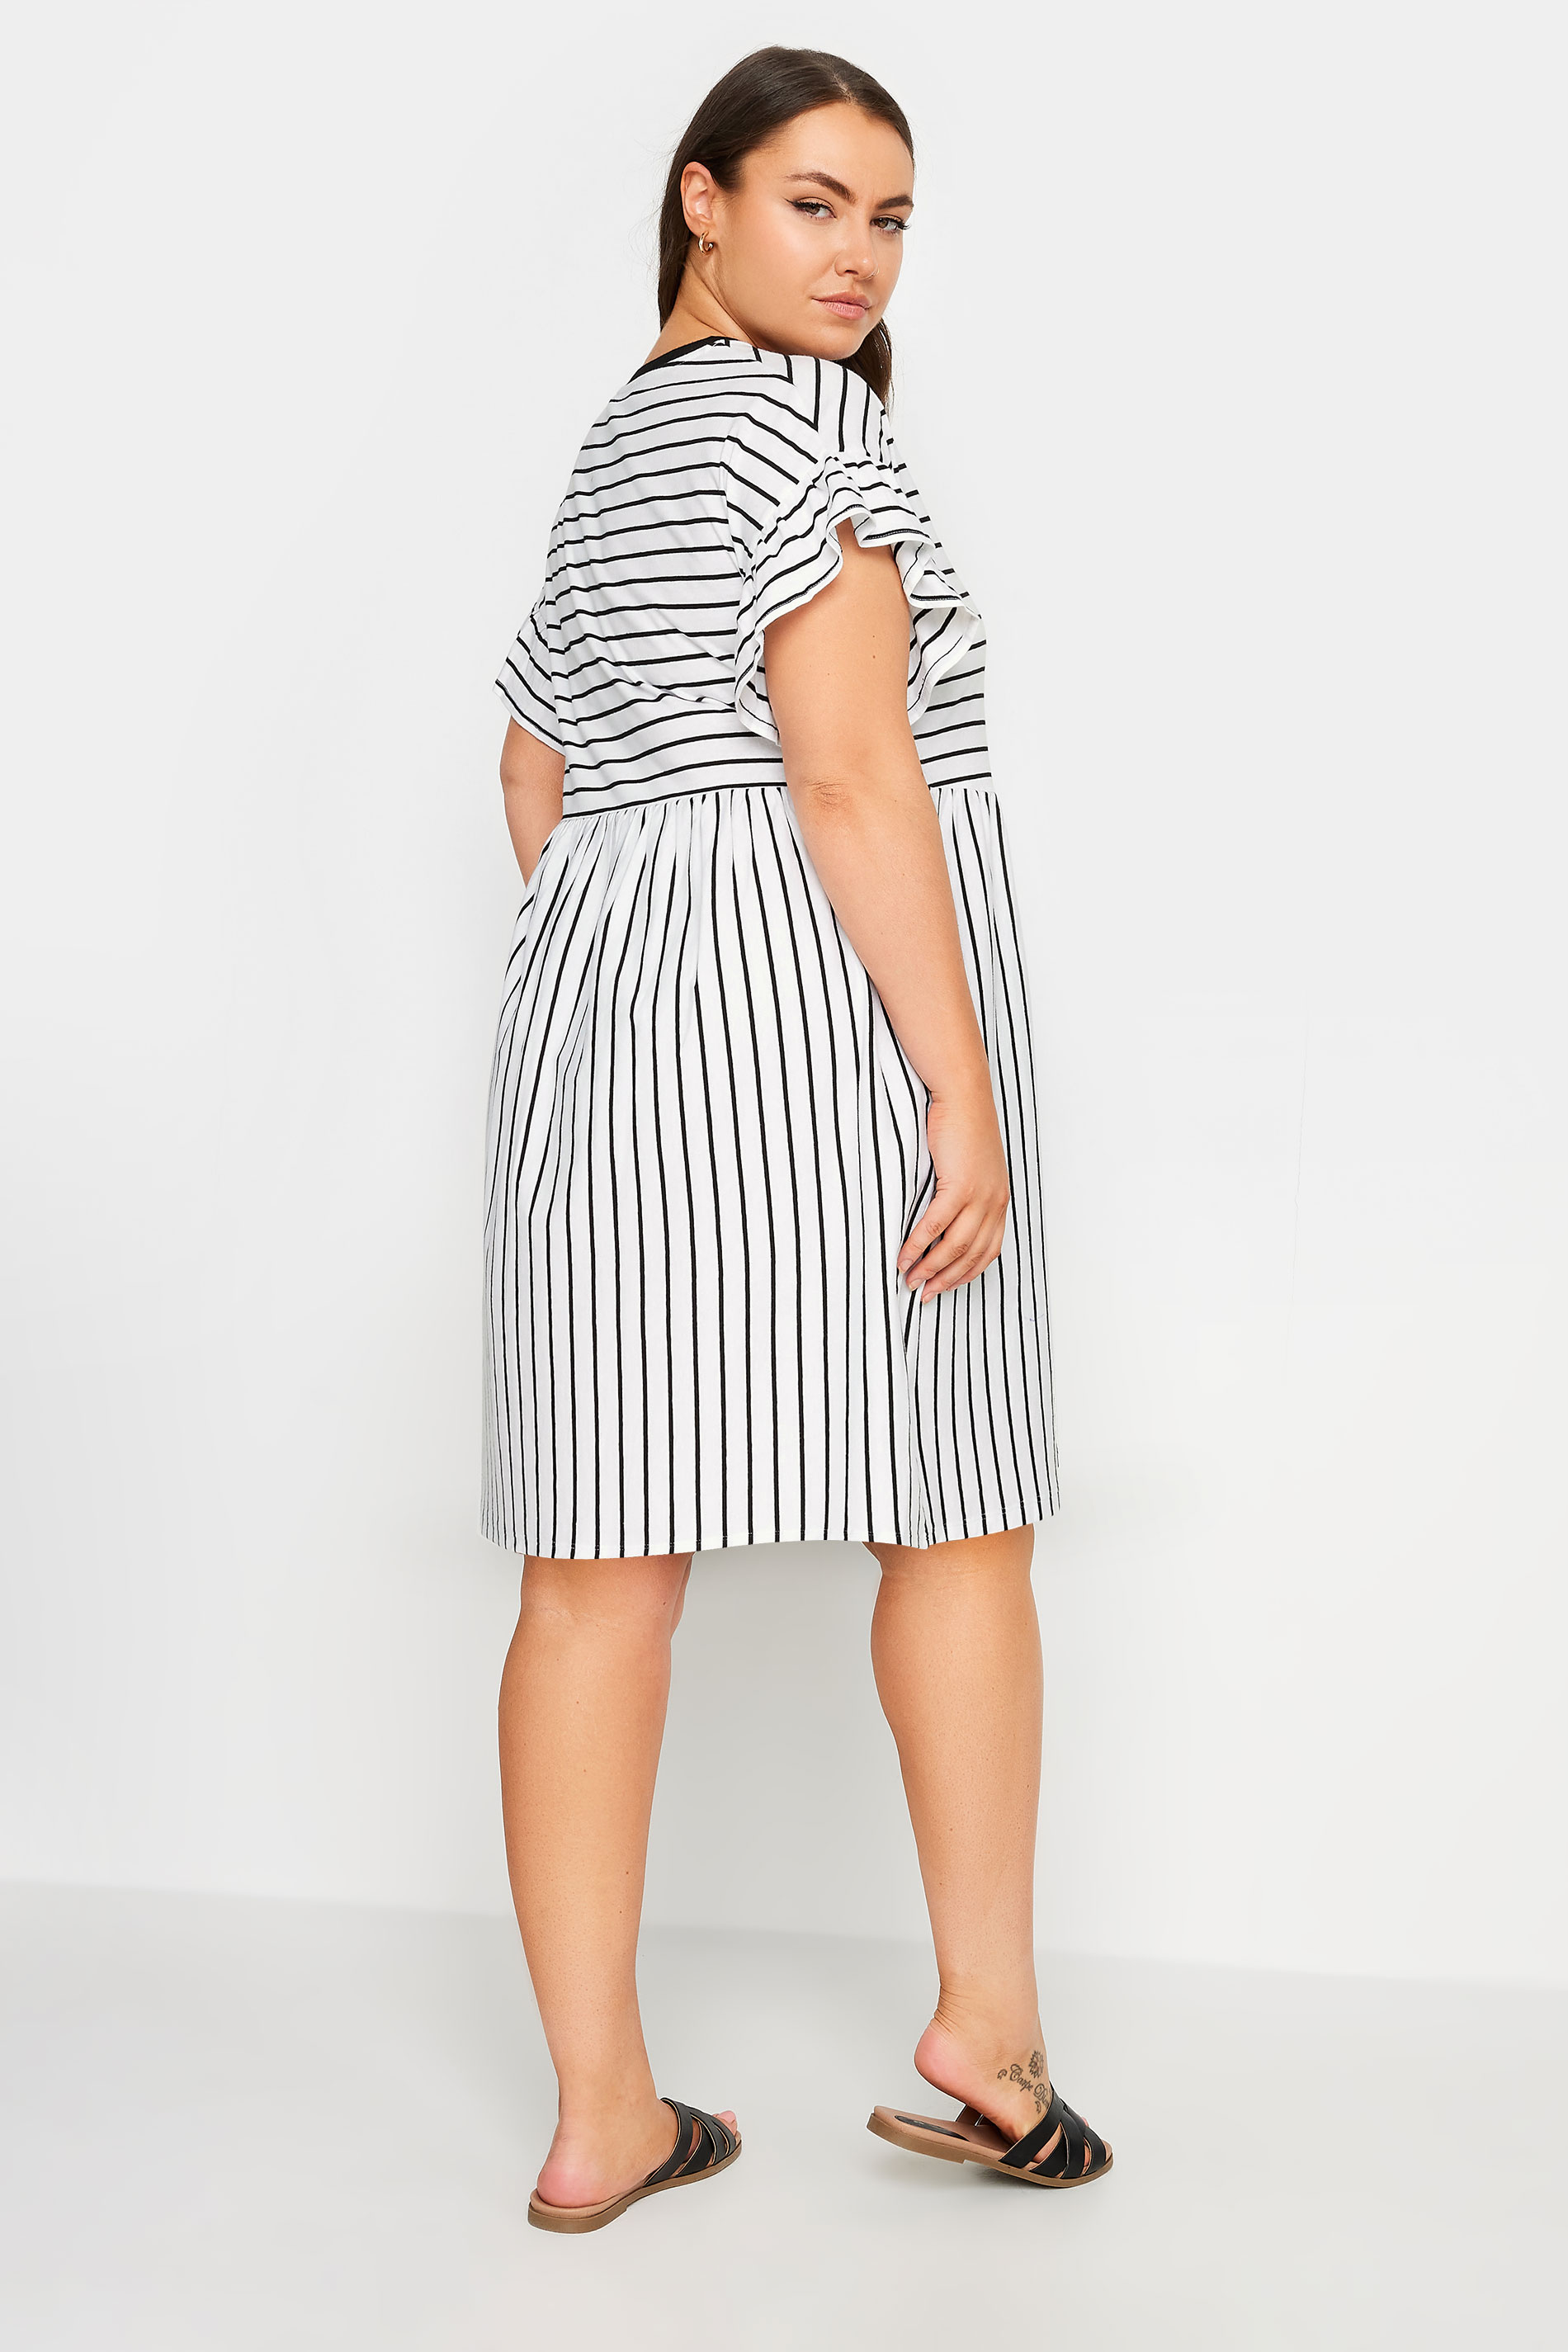 YOURS Plus Size Black & White Stripe Frill Sleeve Smock Tunic Dress | Yours Clothing 3